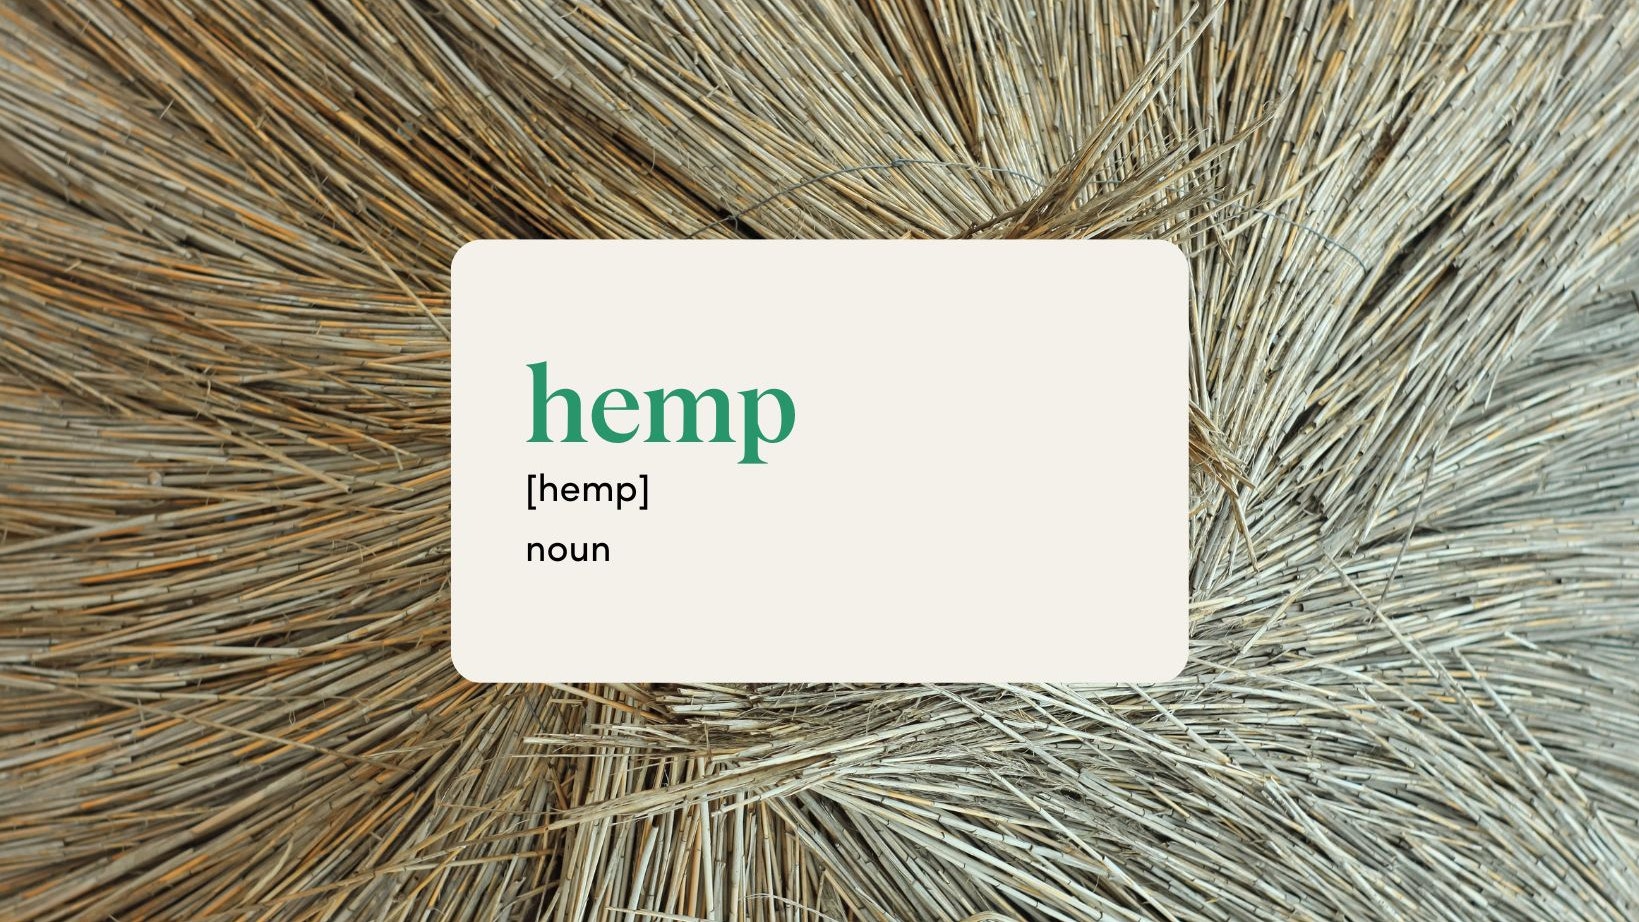 What is hemp?